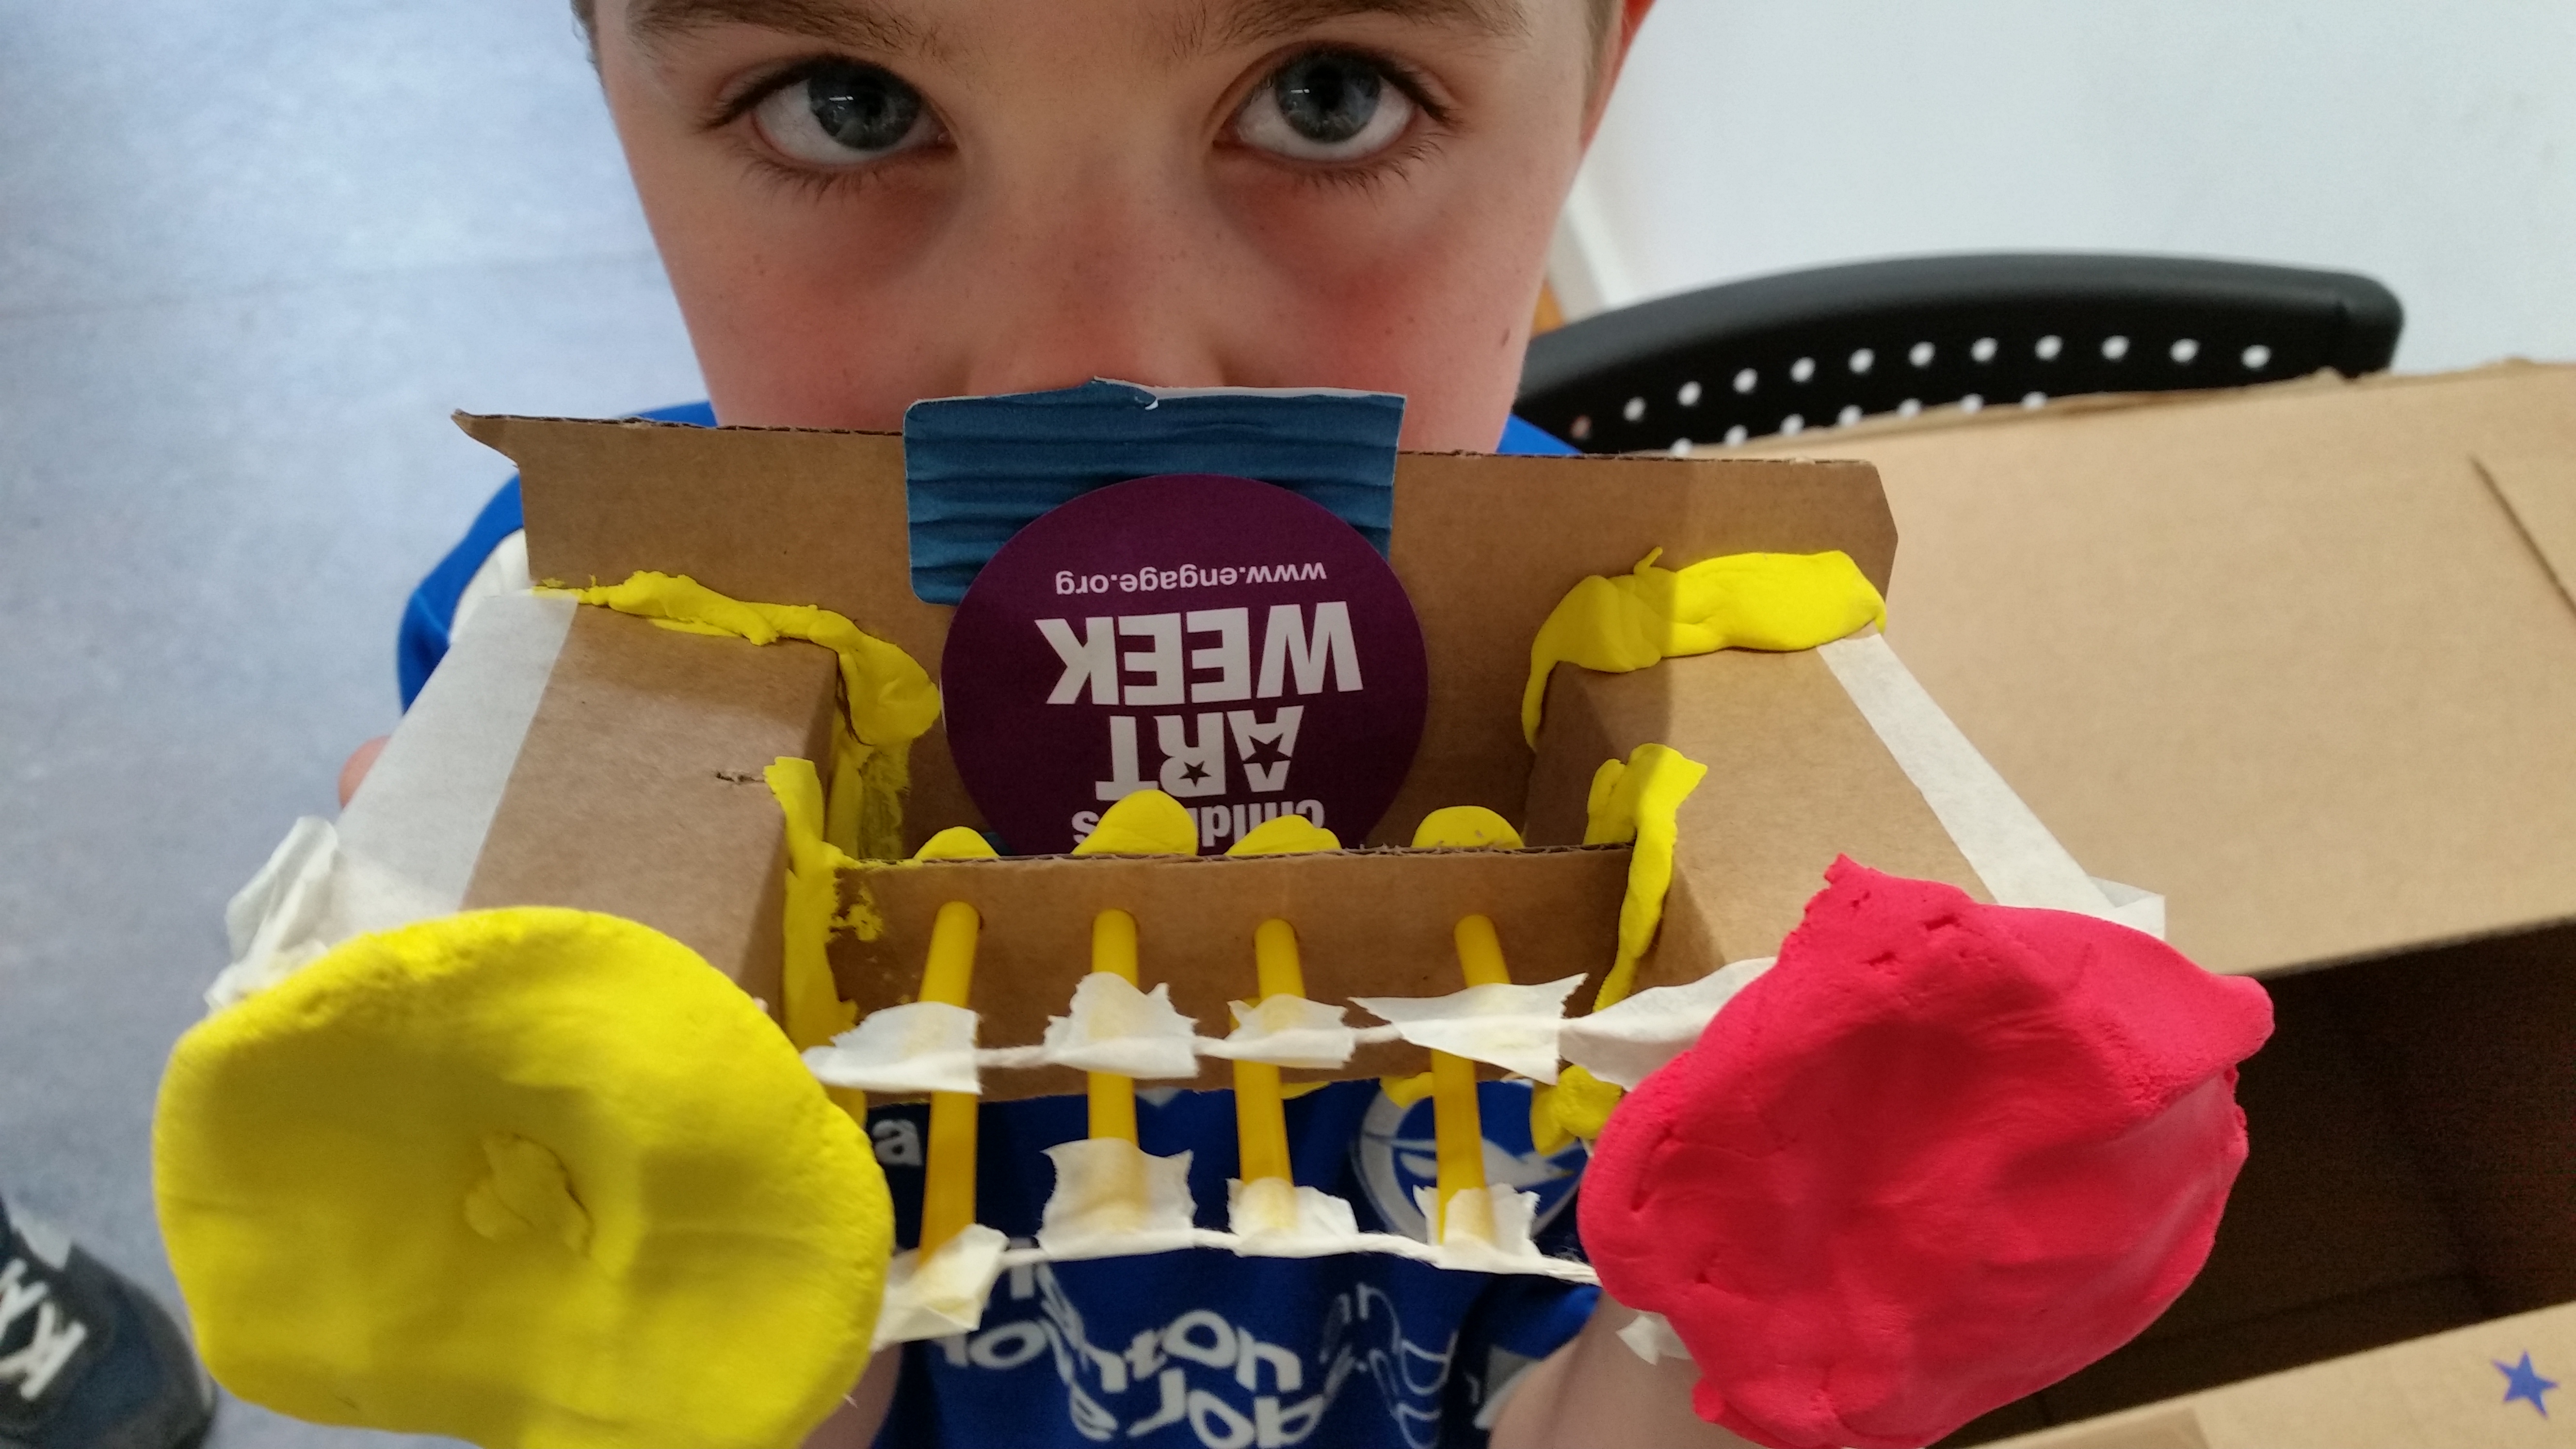 A boy peeps over his creation: a cardboard box bridge.